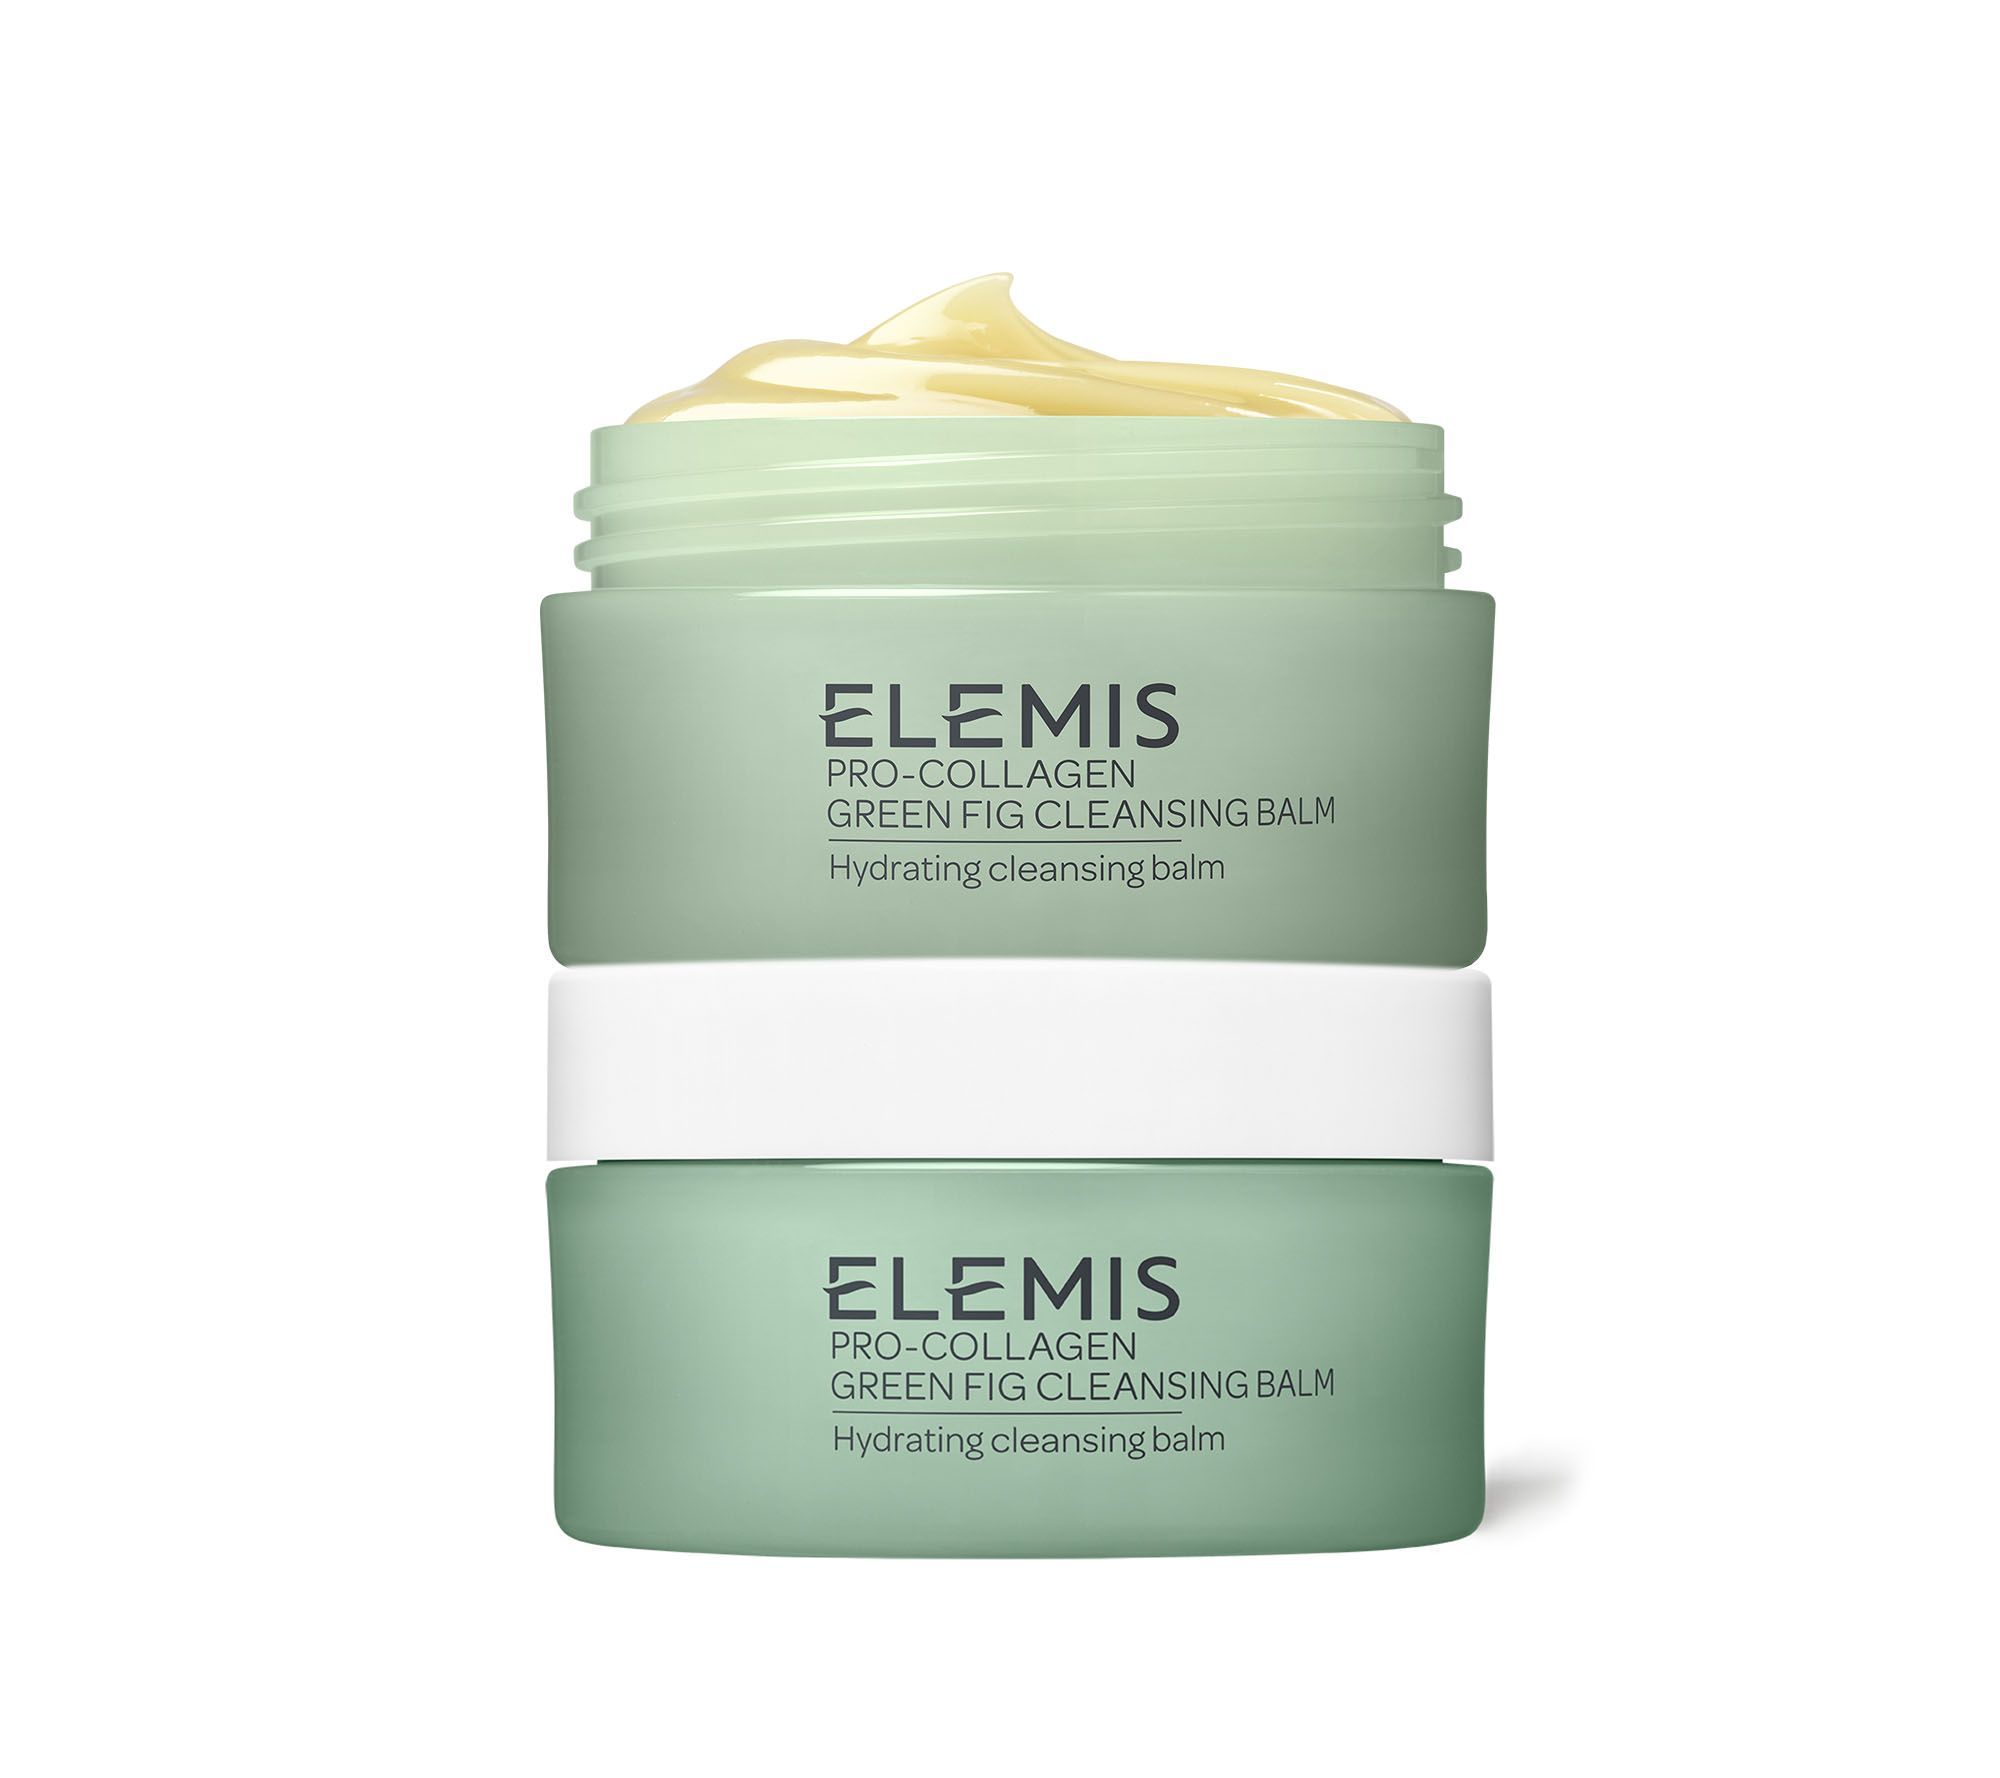 ELEMIS Pro-Collagen Cleansing Balm 1.7oz Duo | QVC